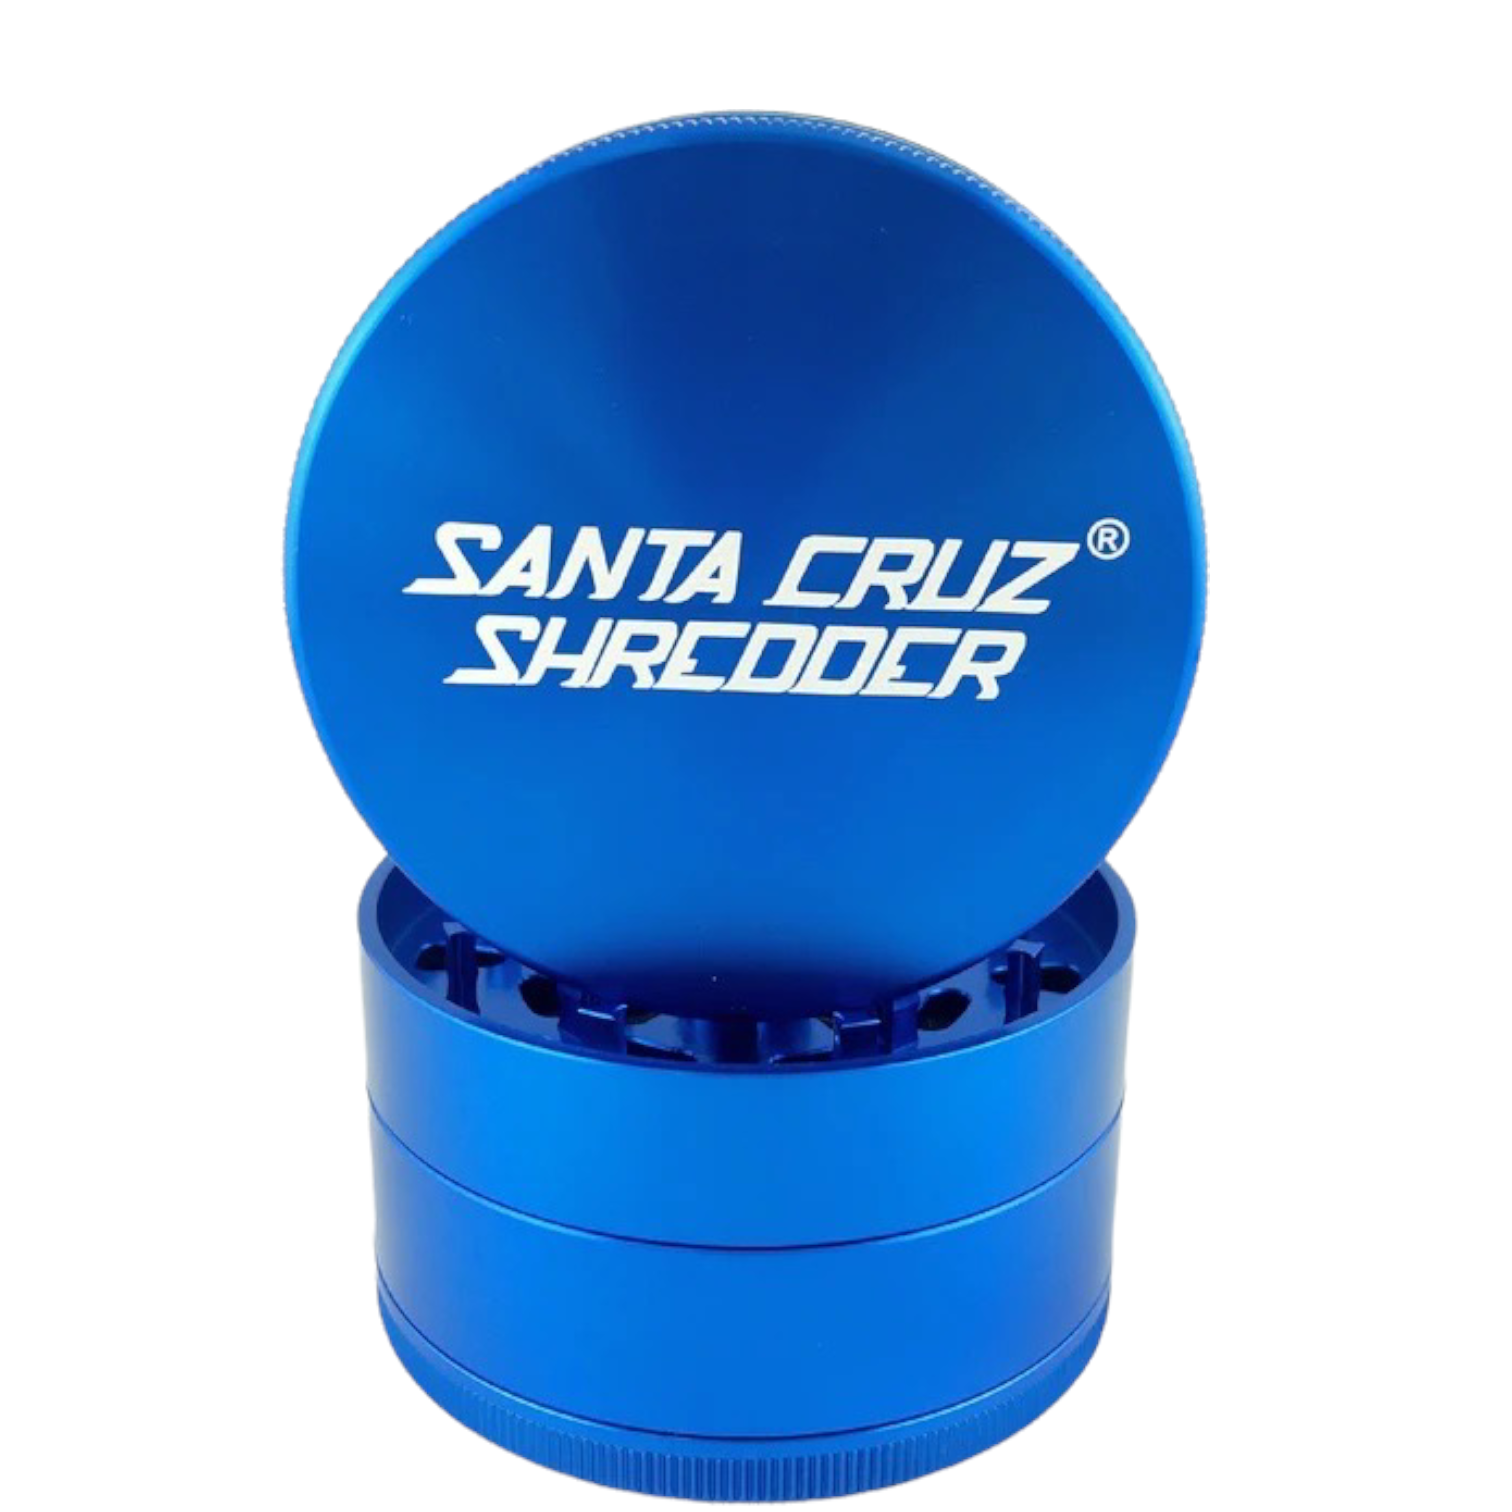 Santa Cruz Shredder - Large 4 Piece - Blue